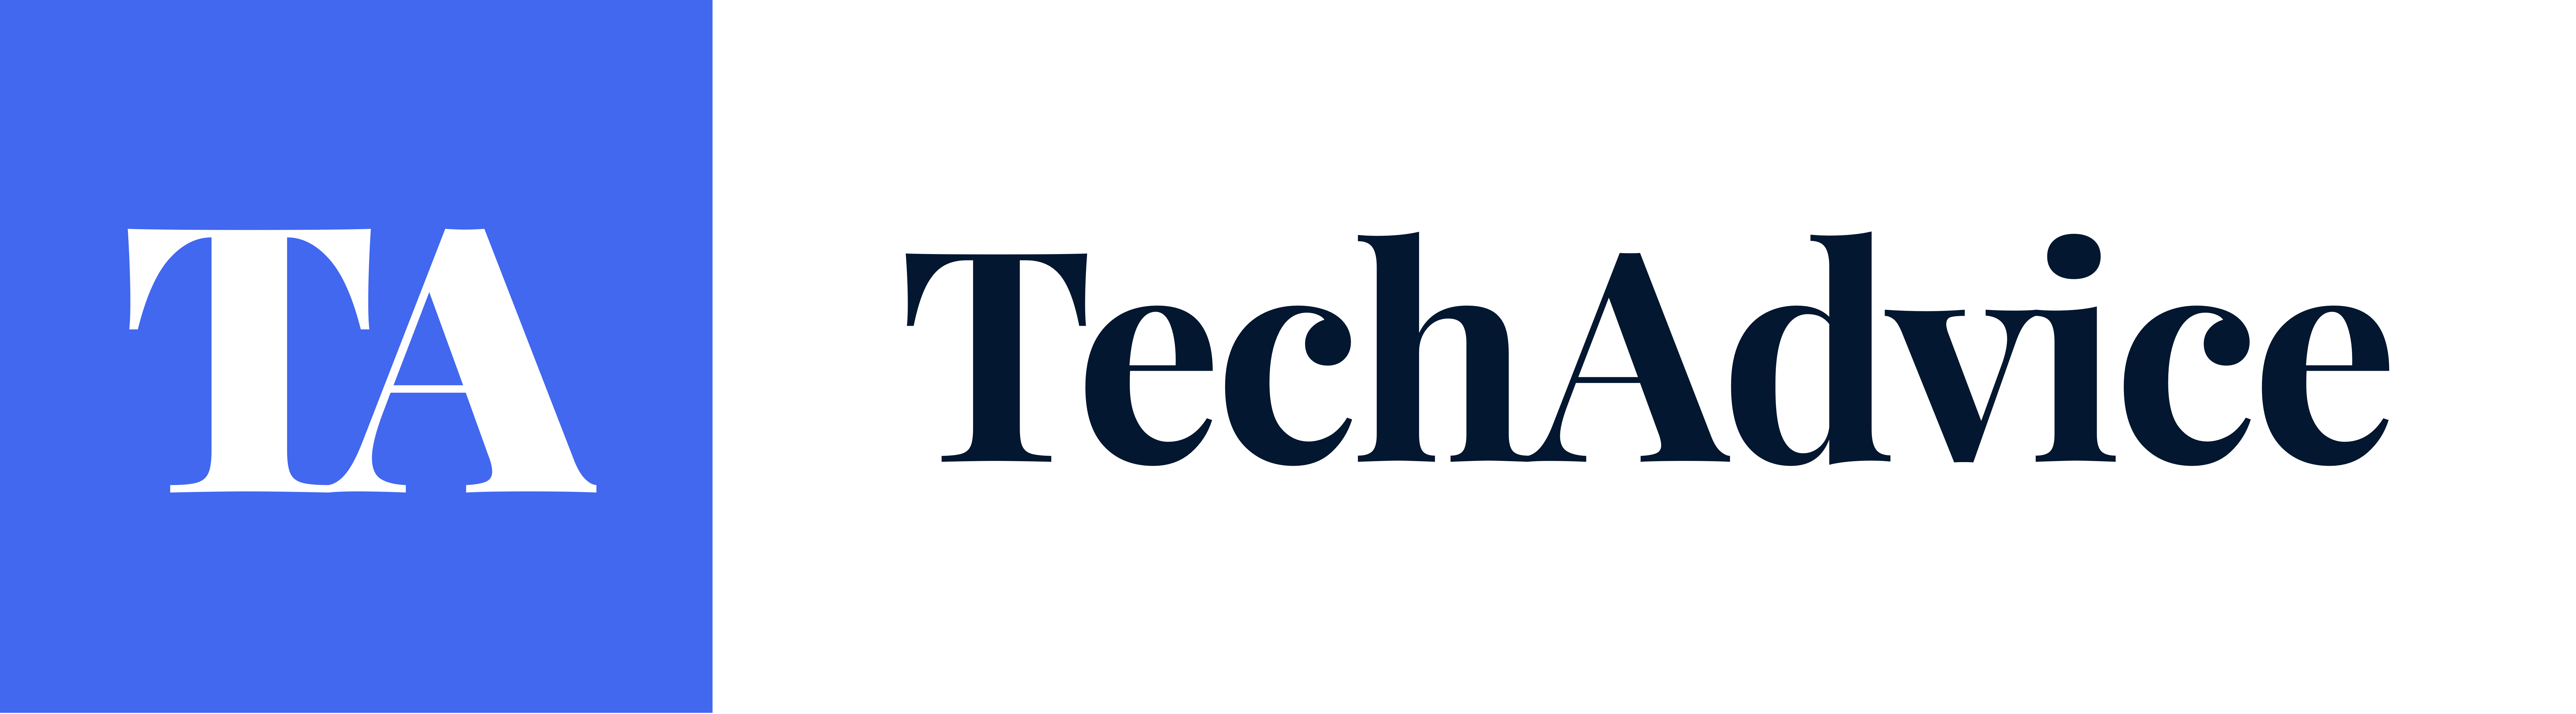 Techadvice logo